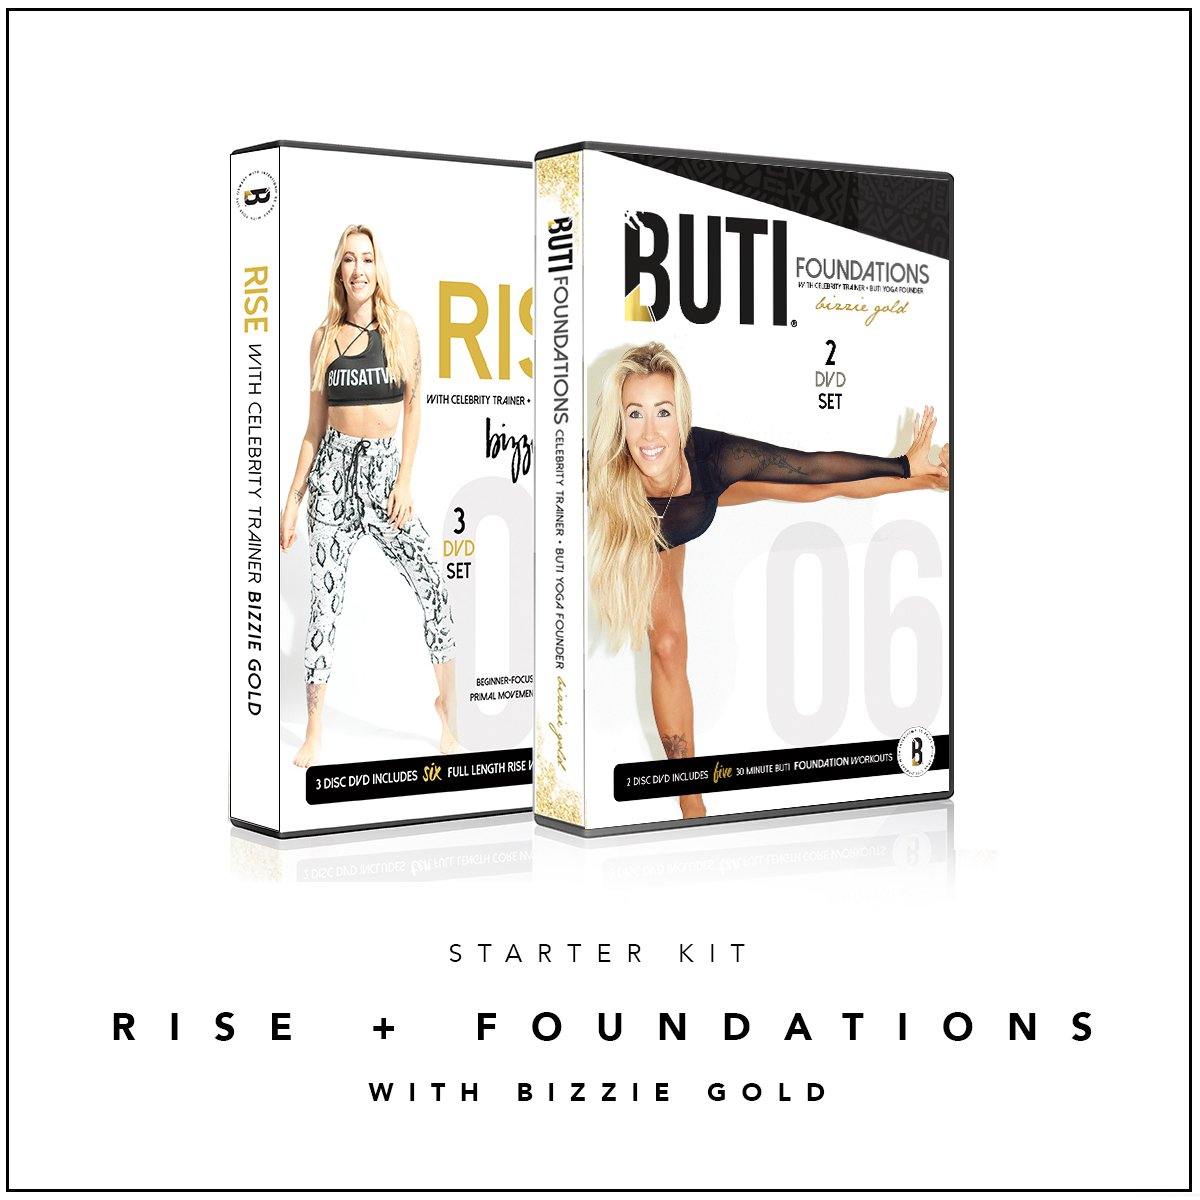 Buti Starter Kit - RISE + FOUNDATIONS BUNDLE - Buti Yoga